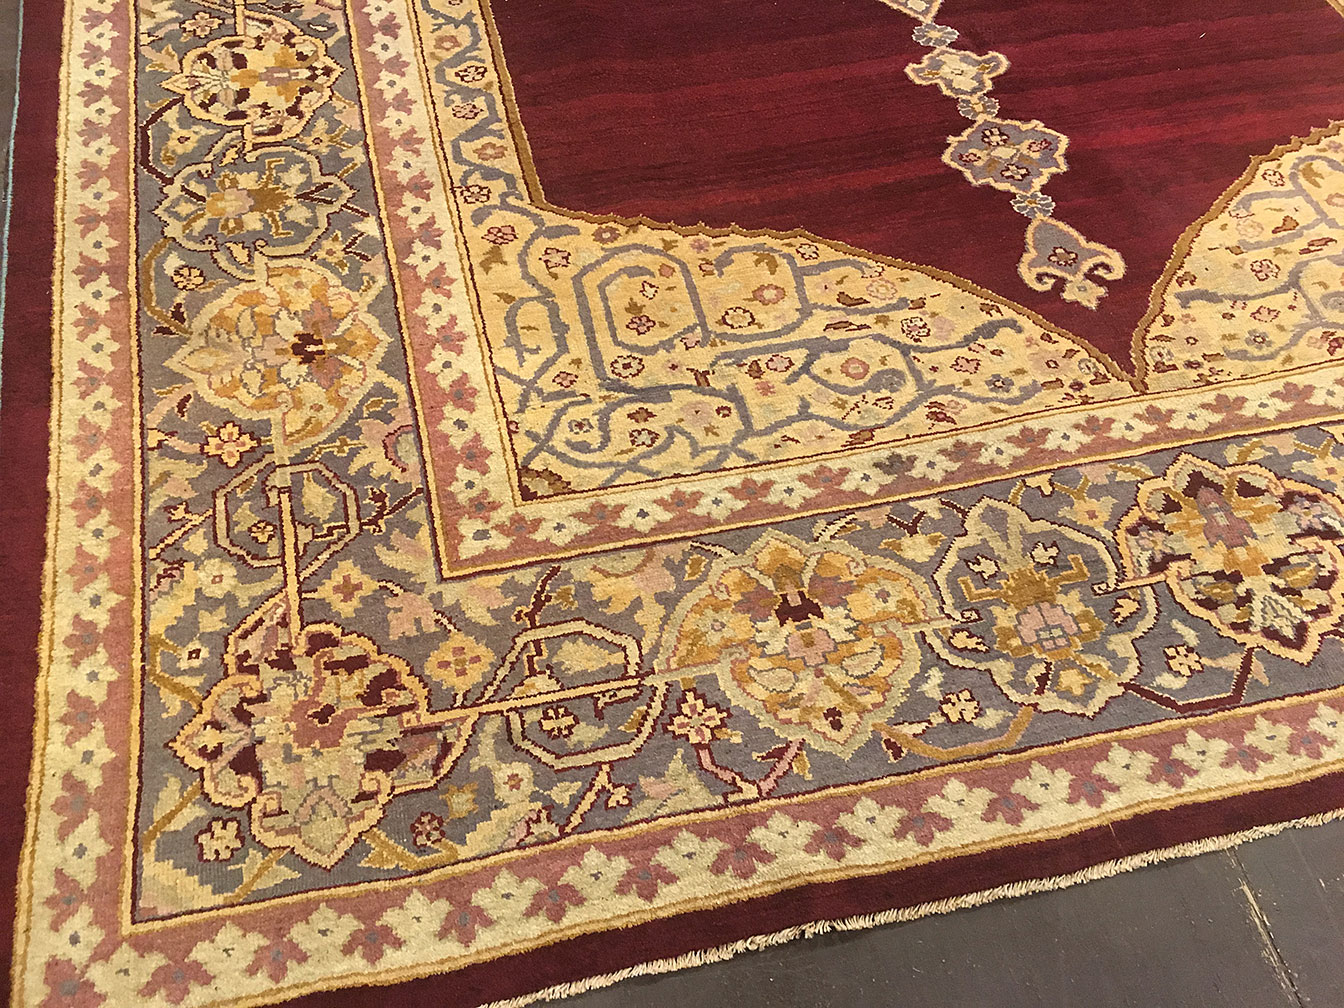 Antique amritsar Carpet - # 52141